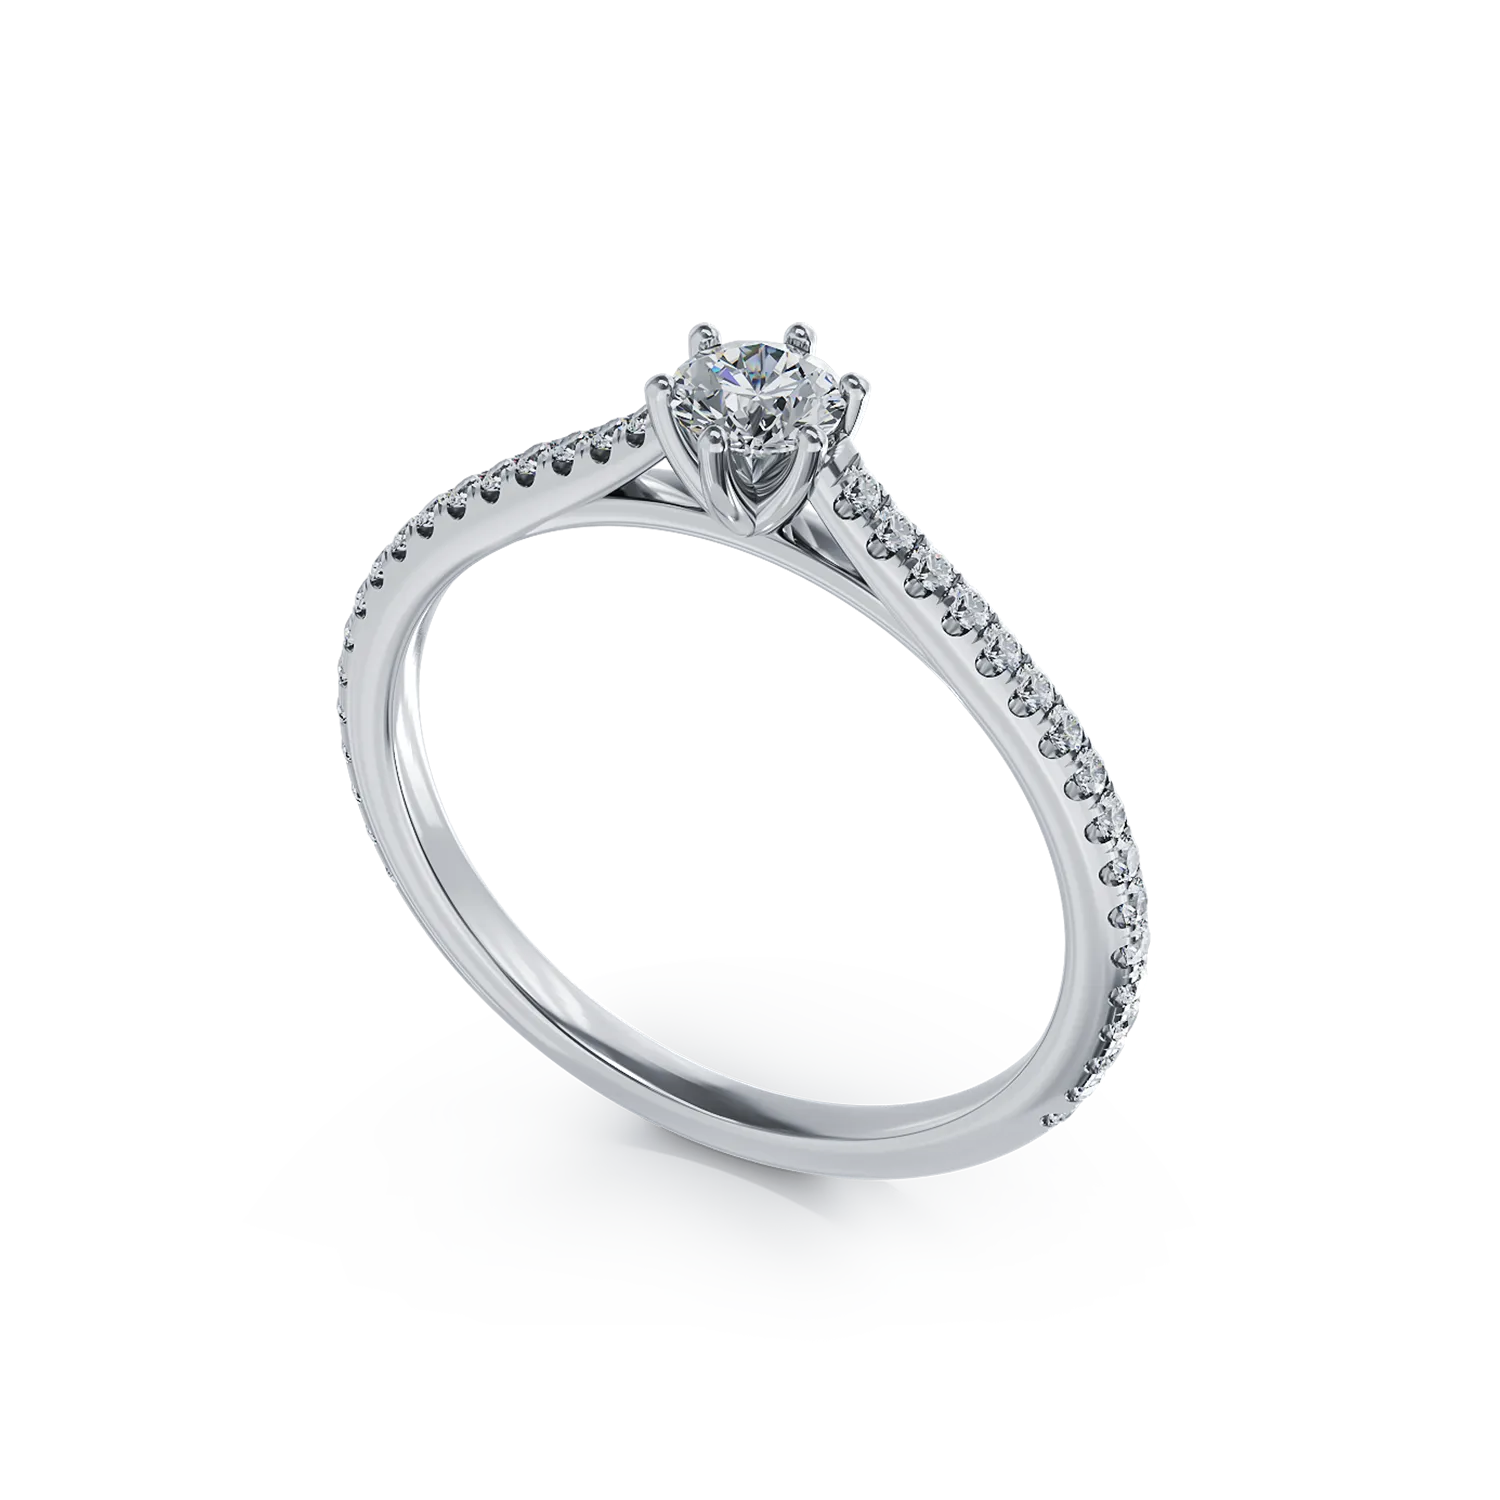 Platinum engagement ring with 0.19ct diamond and 0.18ct diamonds